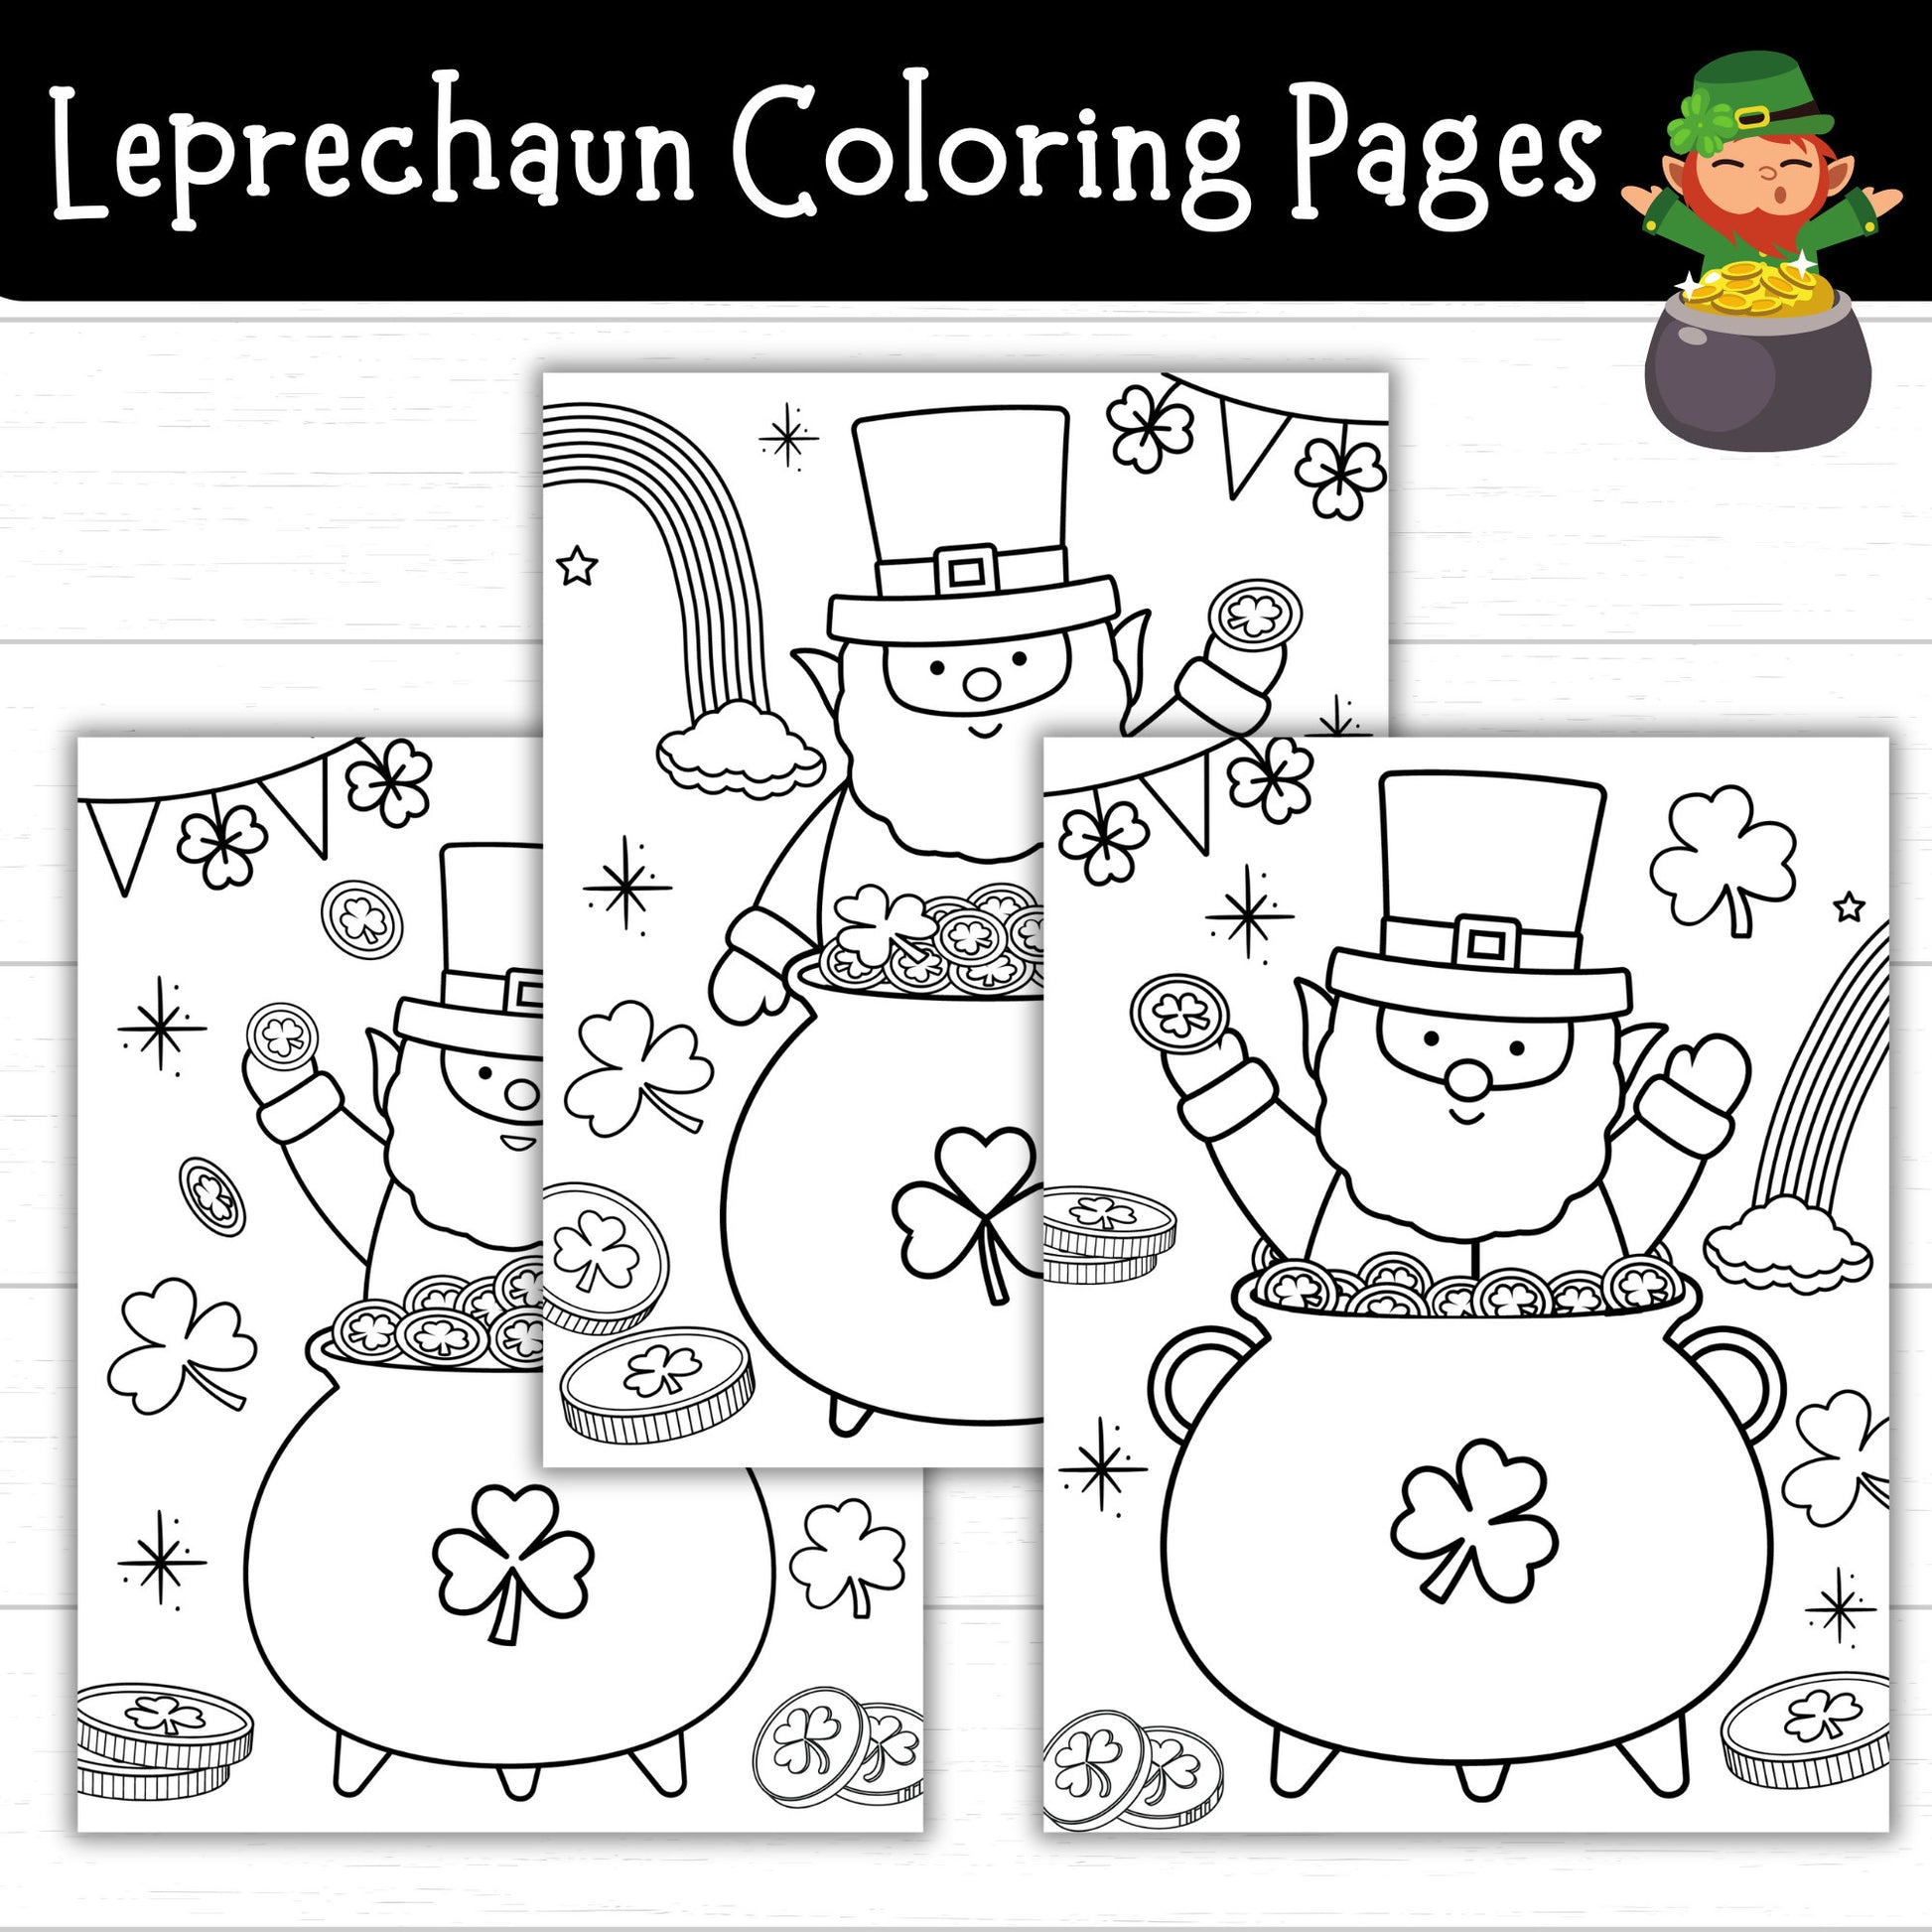 Leprechaun Coloring Pages, Printable Leprechaun Activities, St. Patrick's Day Printables for Kids, March Activity, Leprechaun Coloring Book